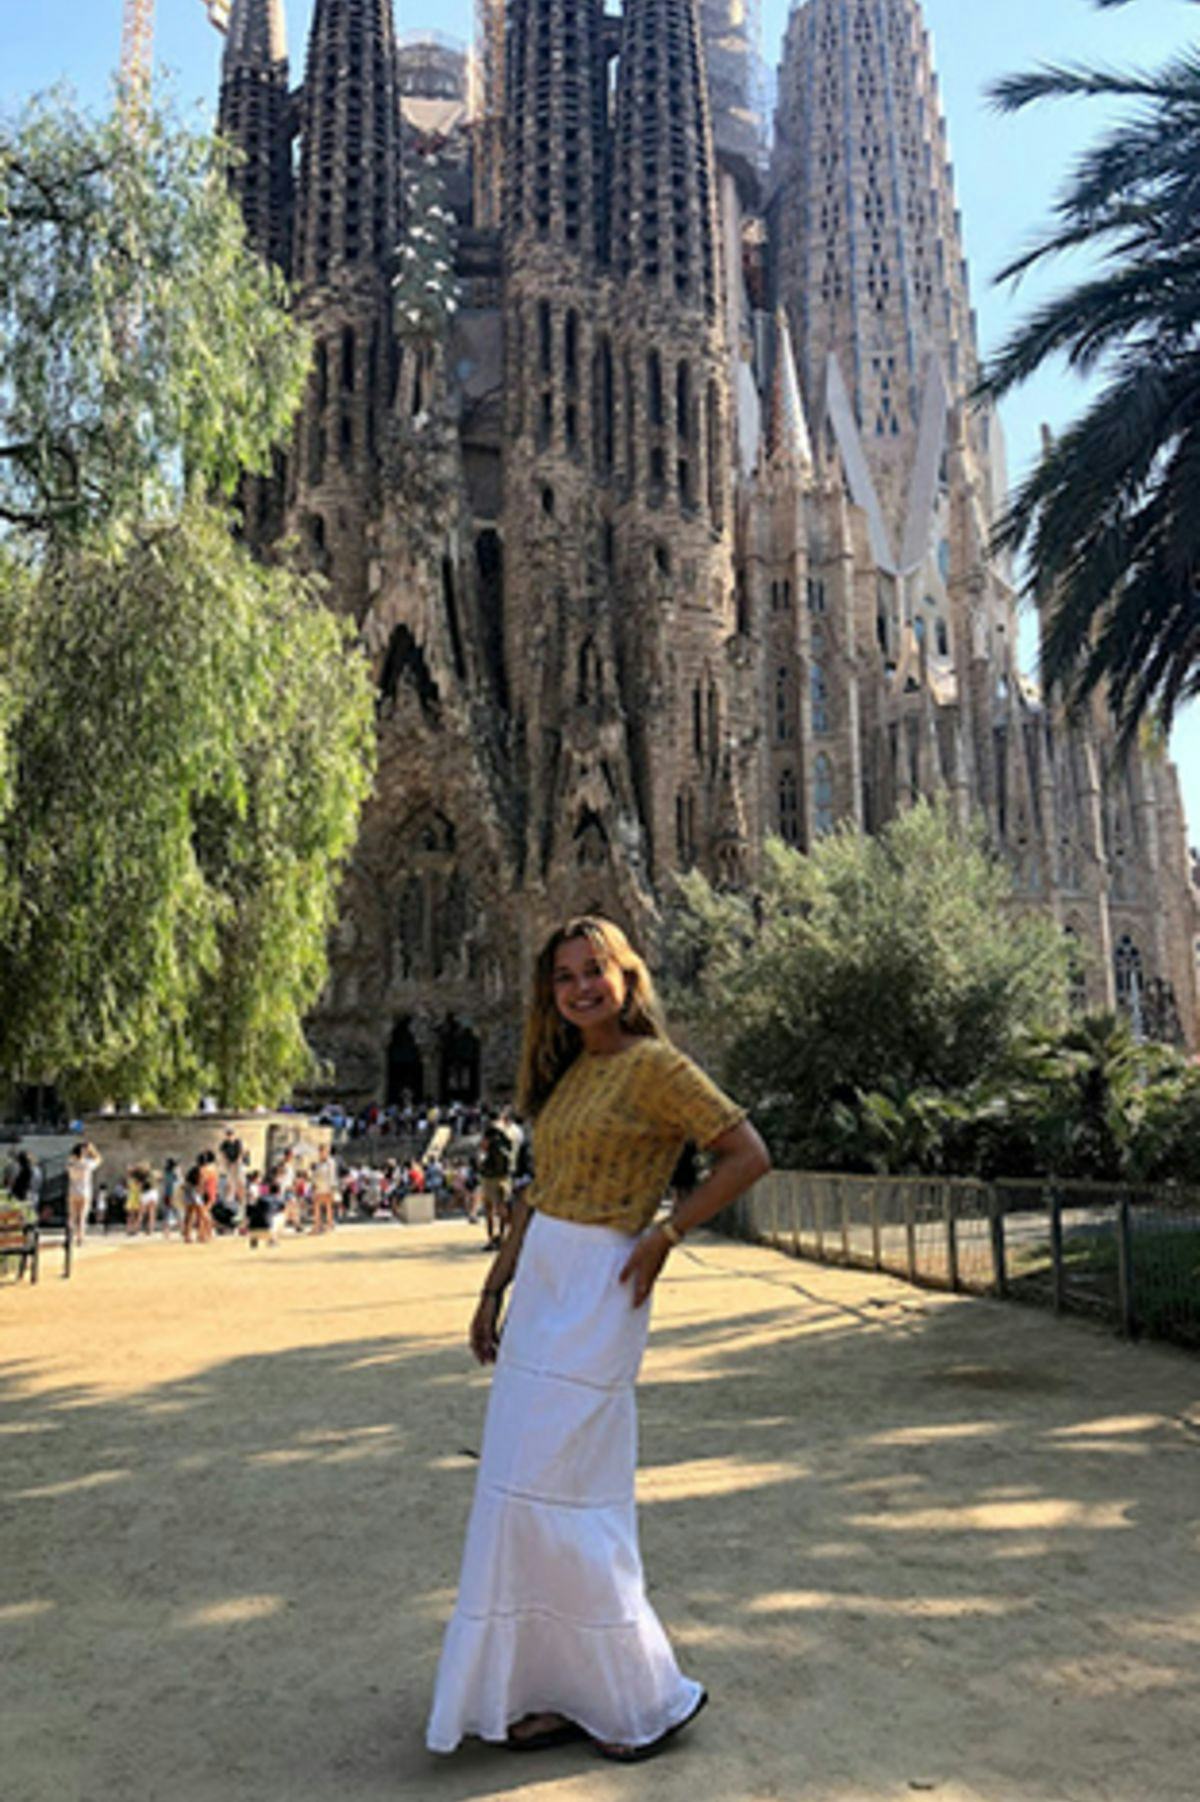 Stevens student Caitlin Haggerty standing in front of La Sagrada Familia Basilica in Barcelona.